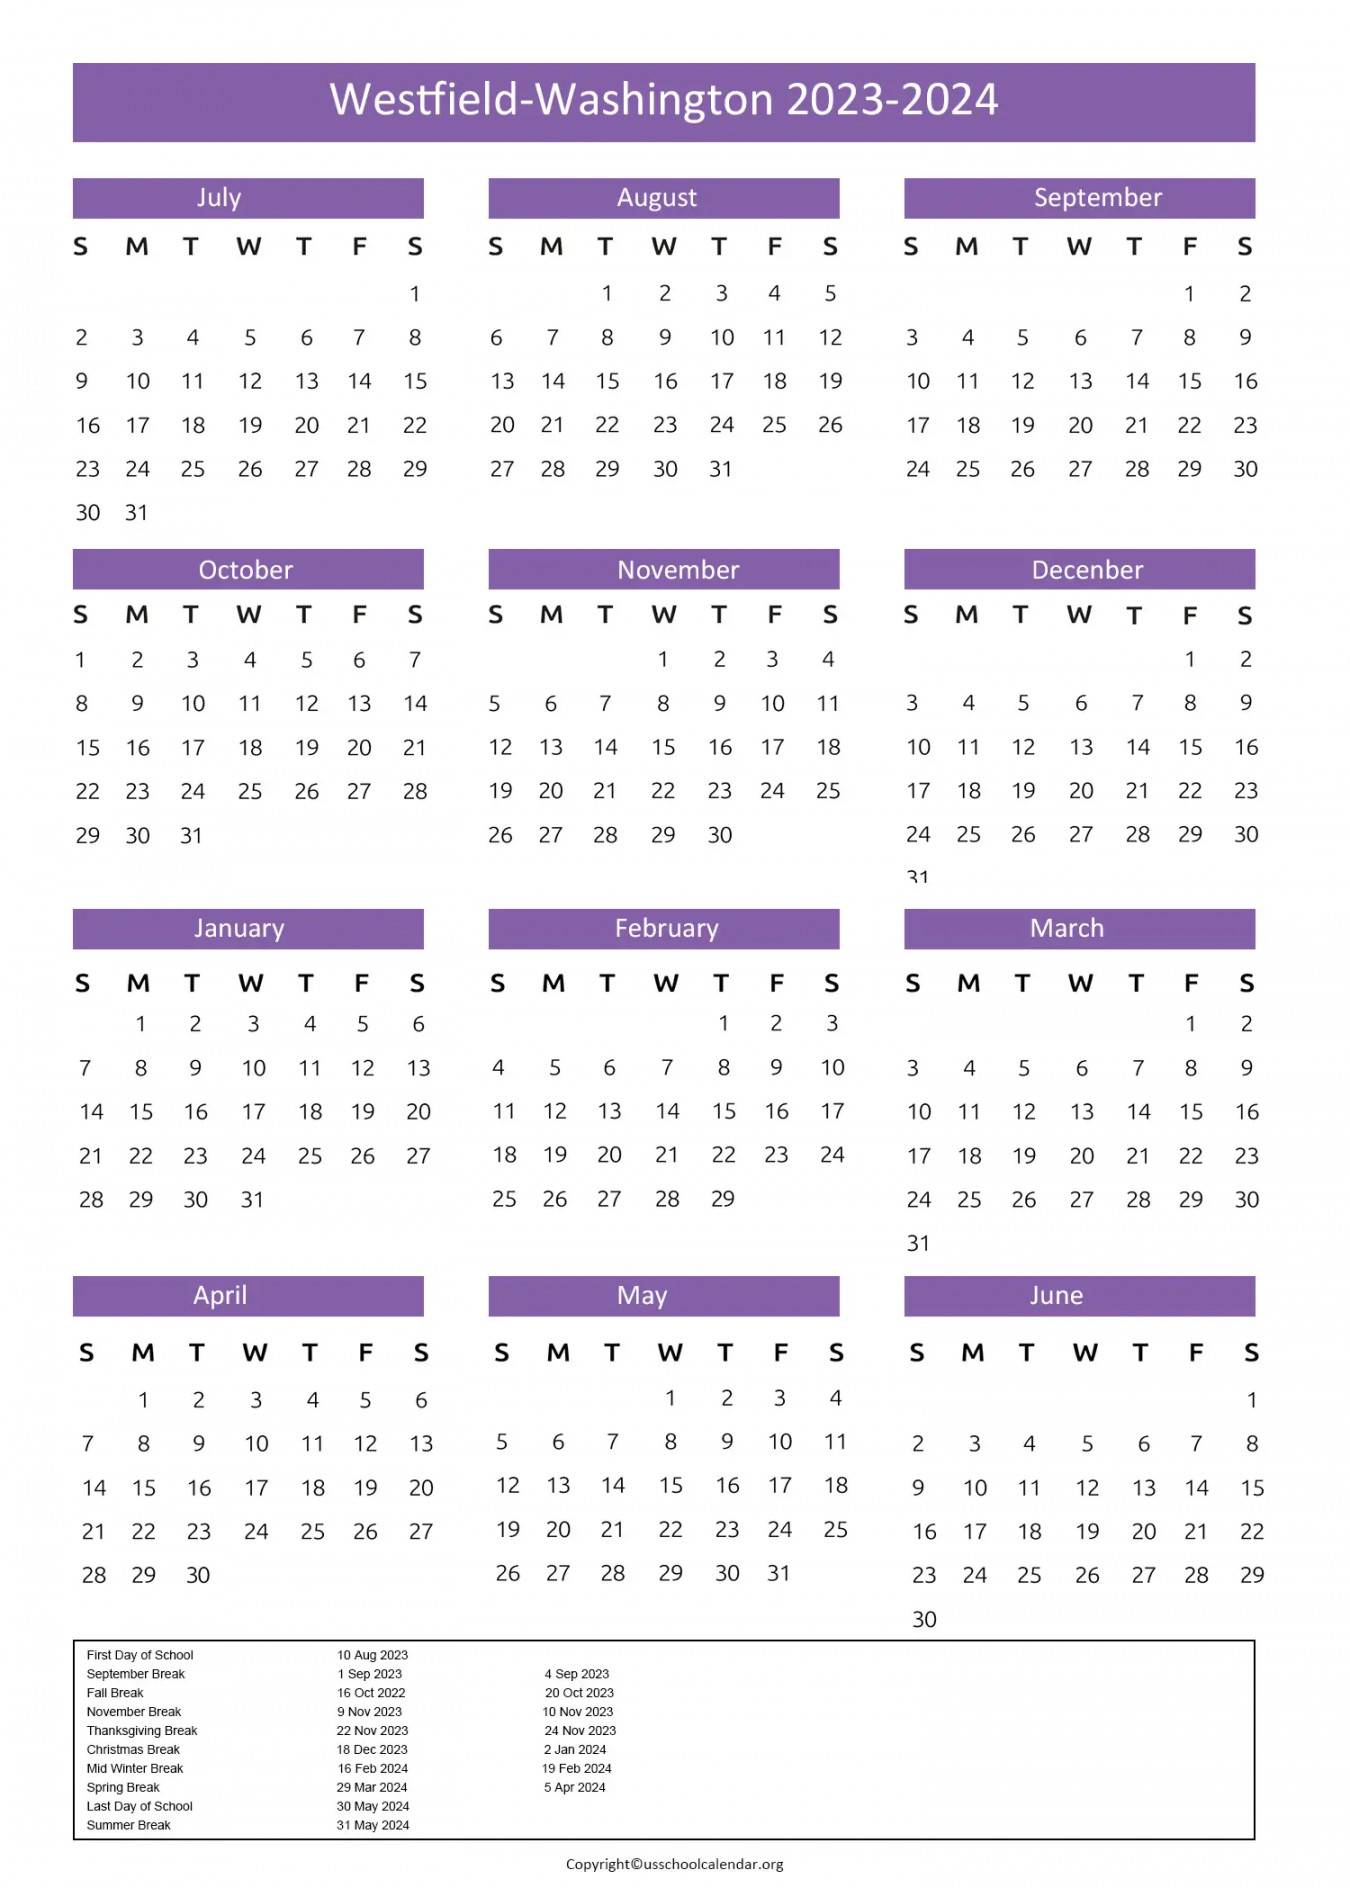 Westfield Washington Schools Calendar with Holidays -